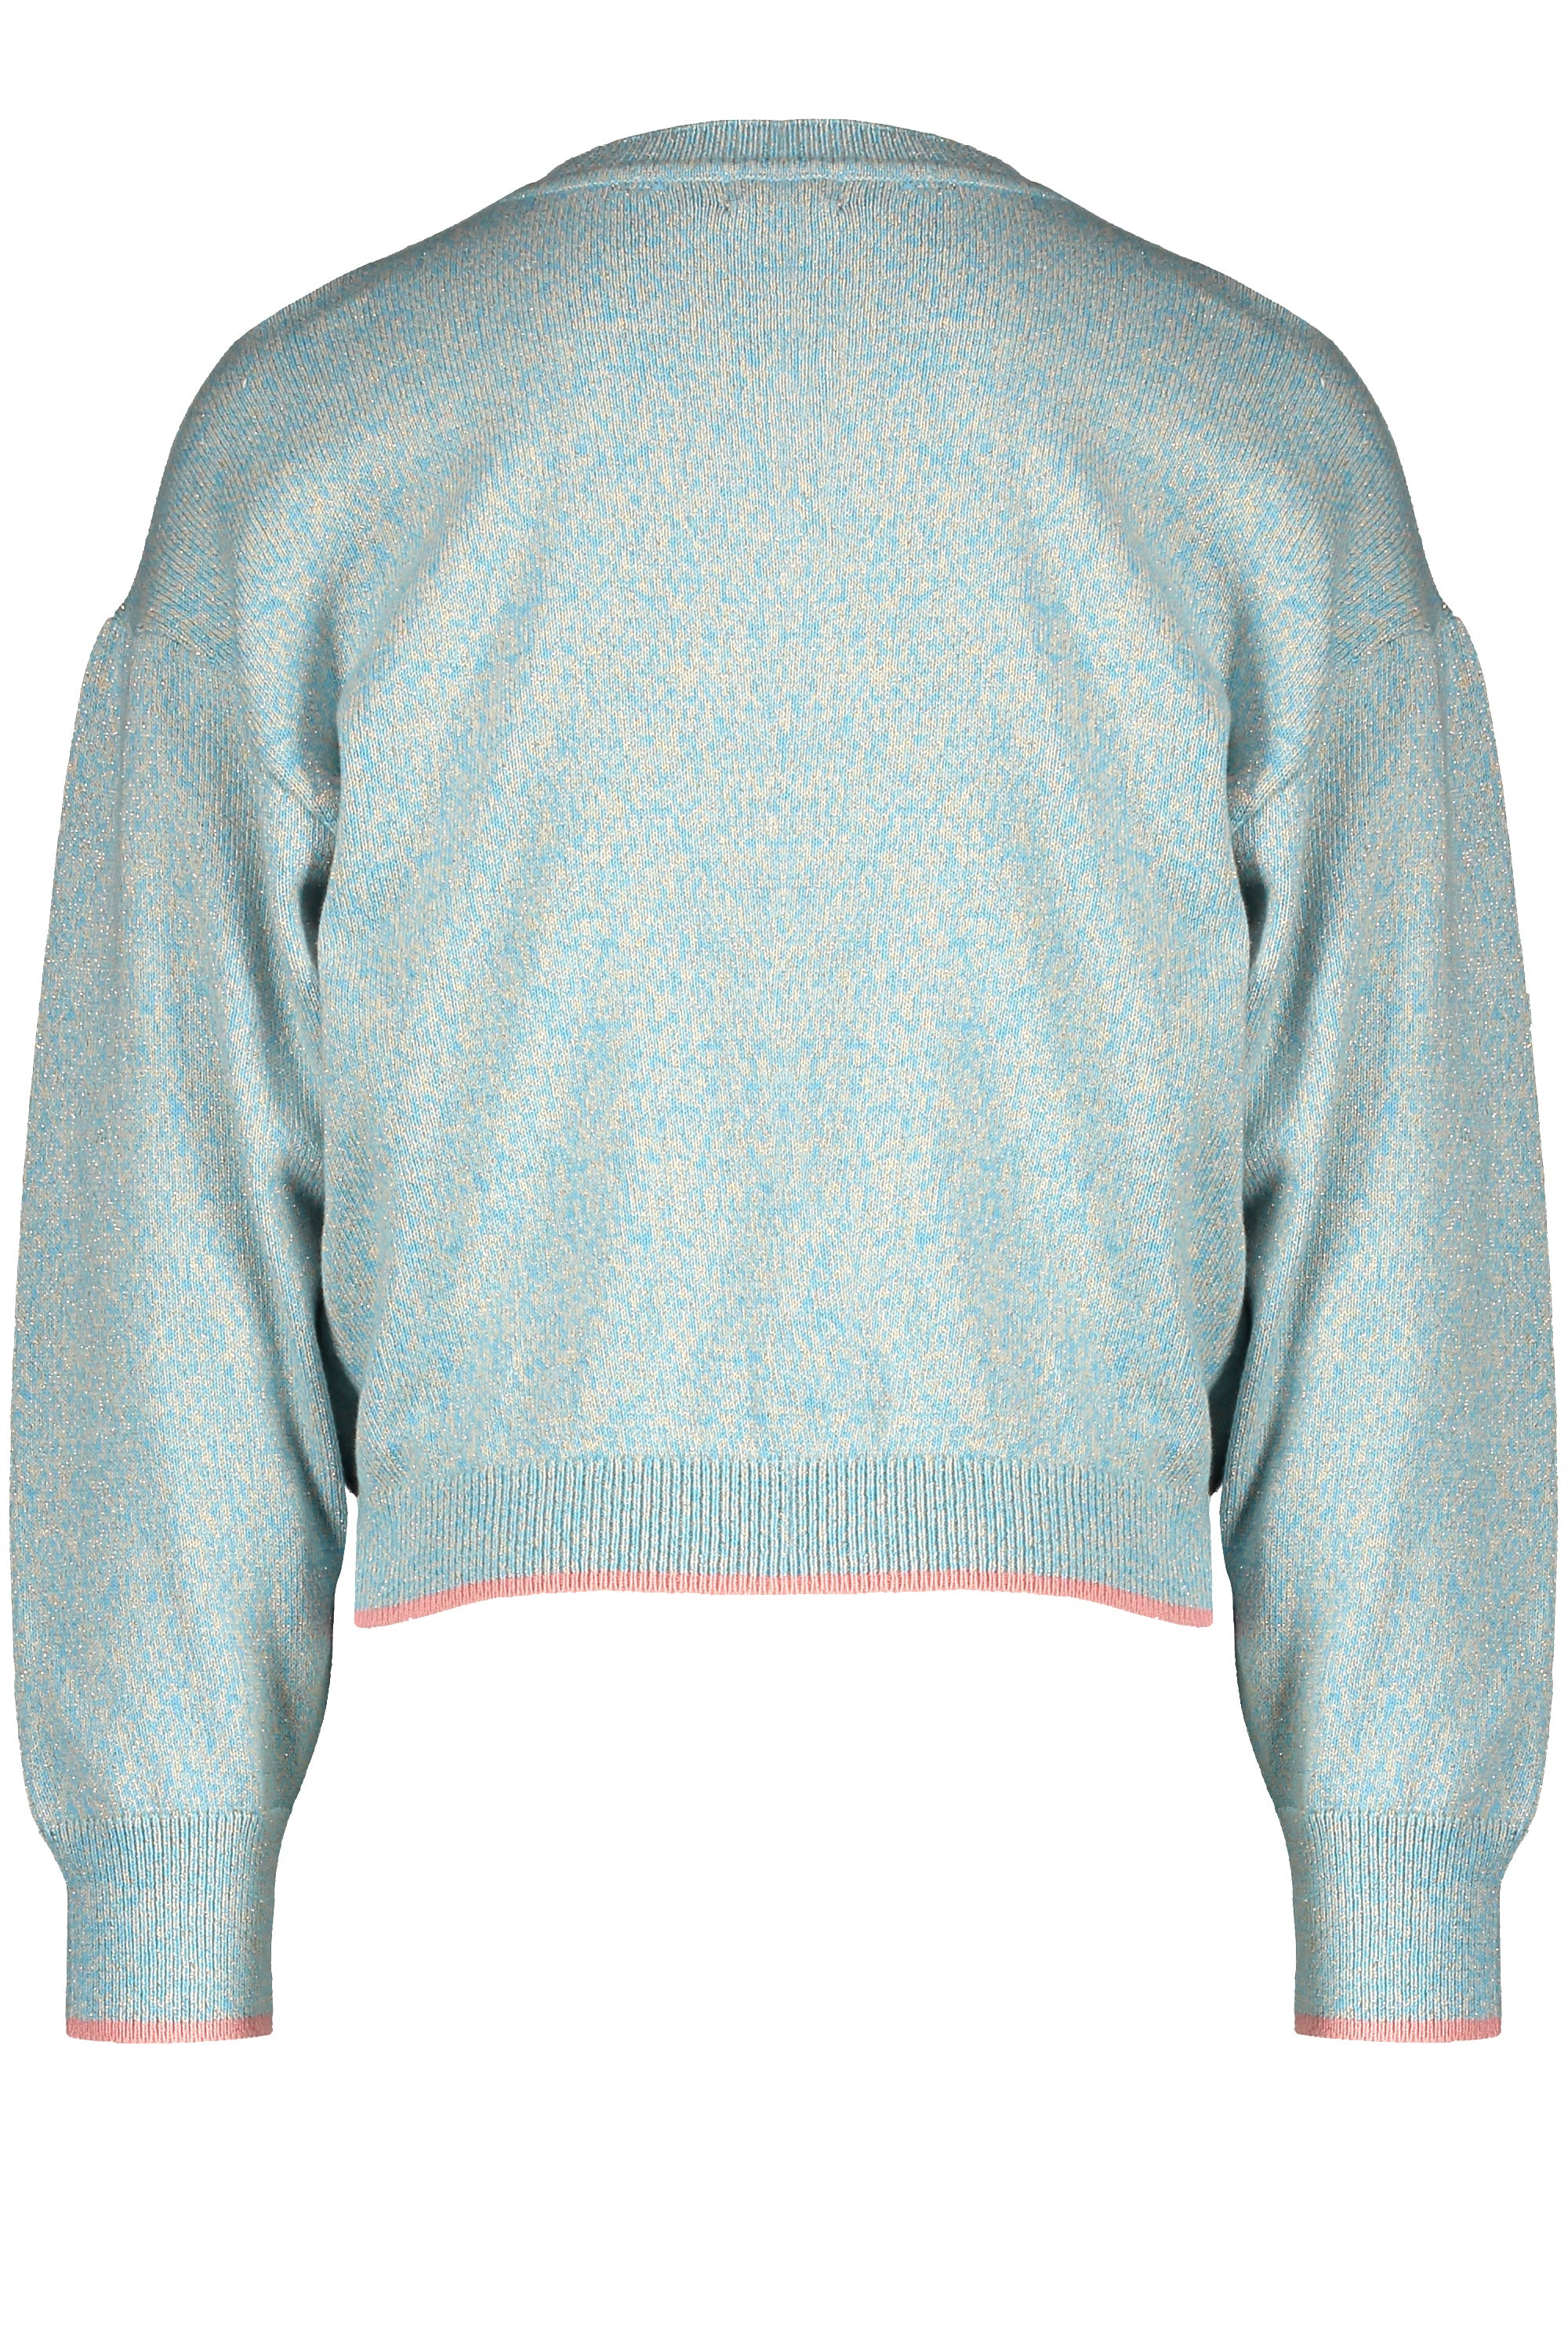 Meisjes Kathy space yarn knitted sweater with puffy sleeves van NoNo in de kleur Light Turquoise in maat 146/152.